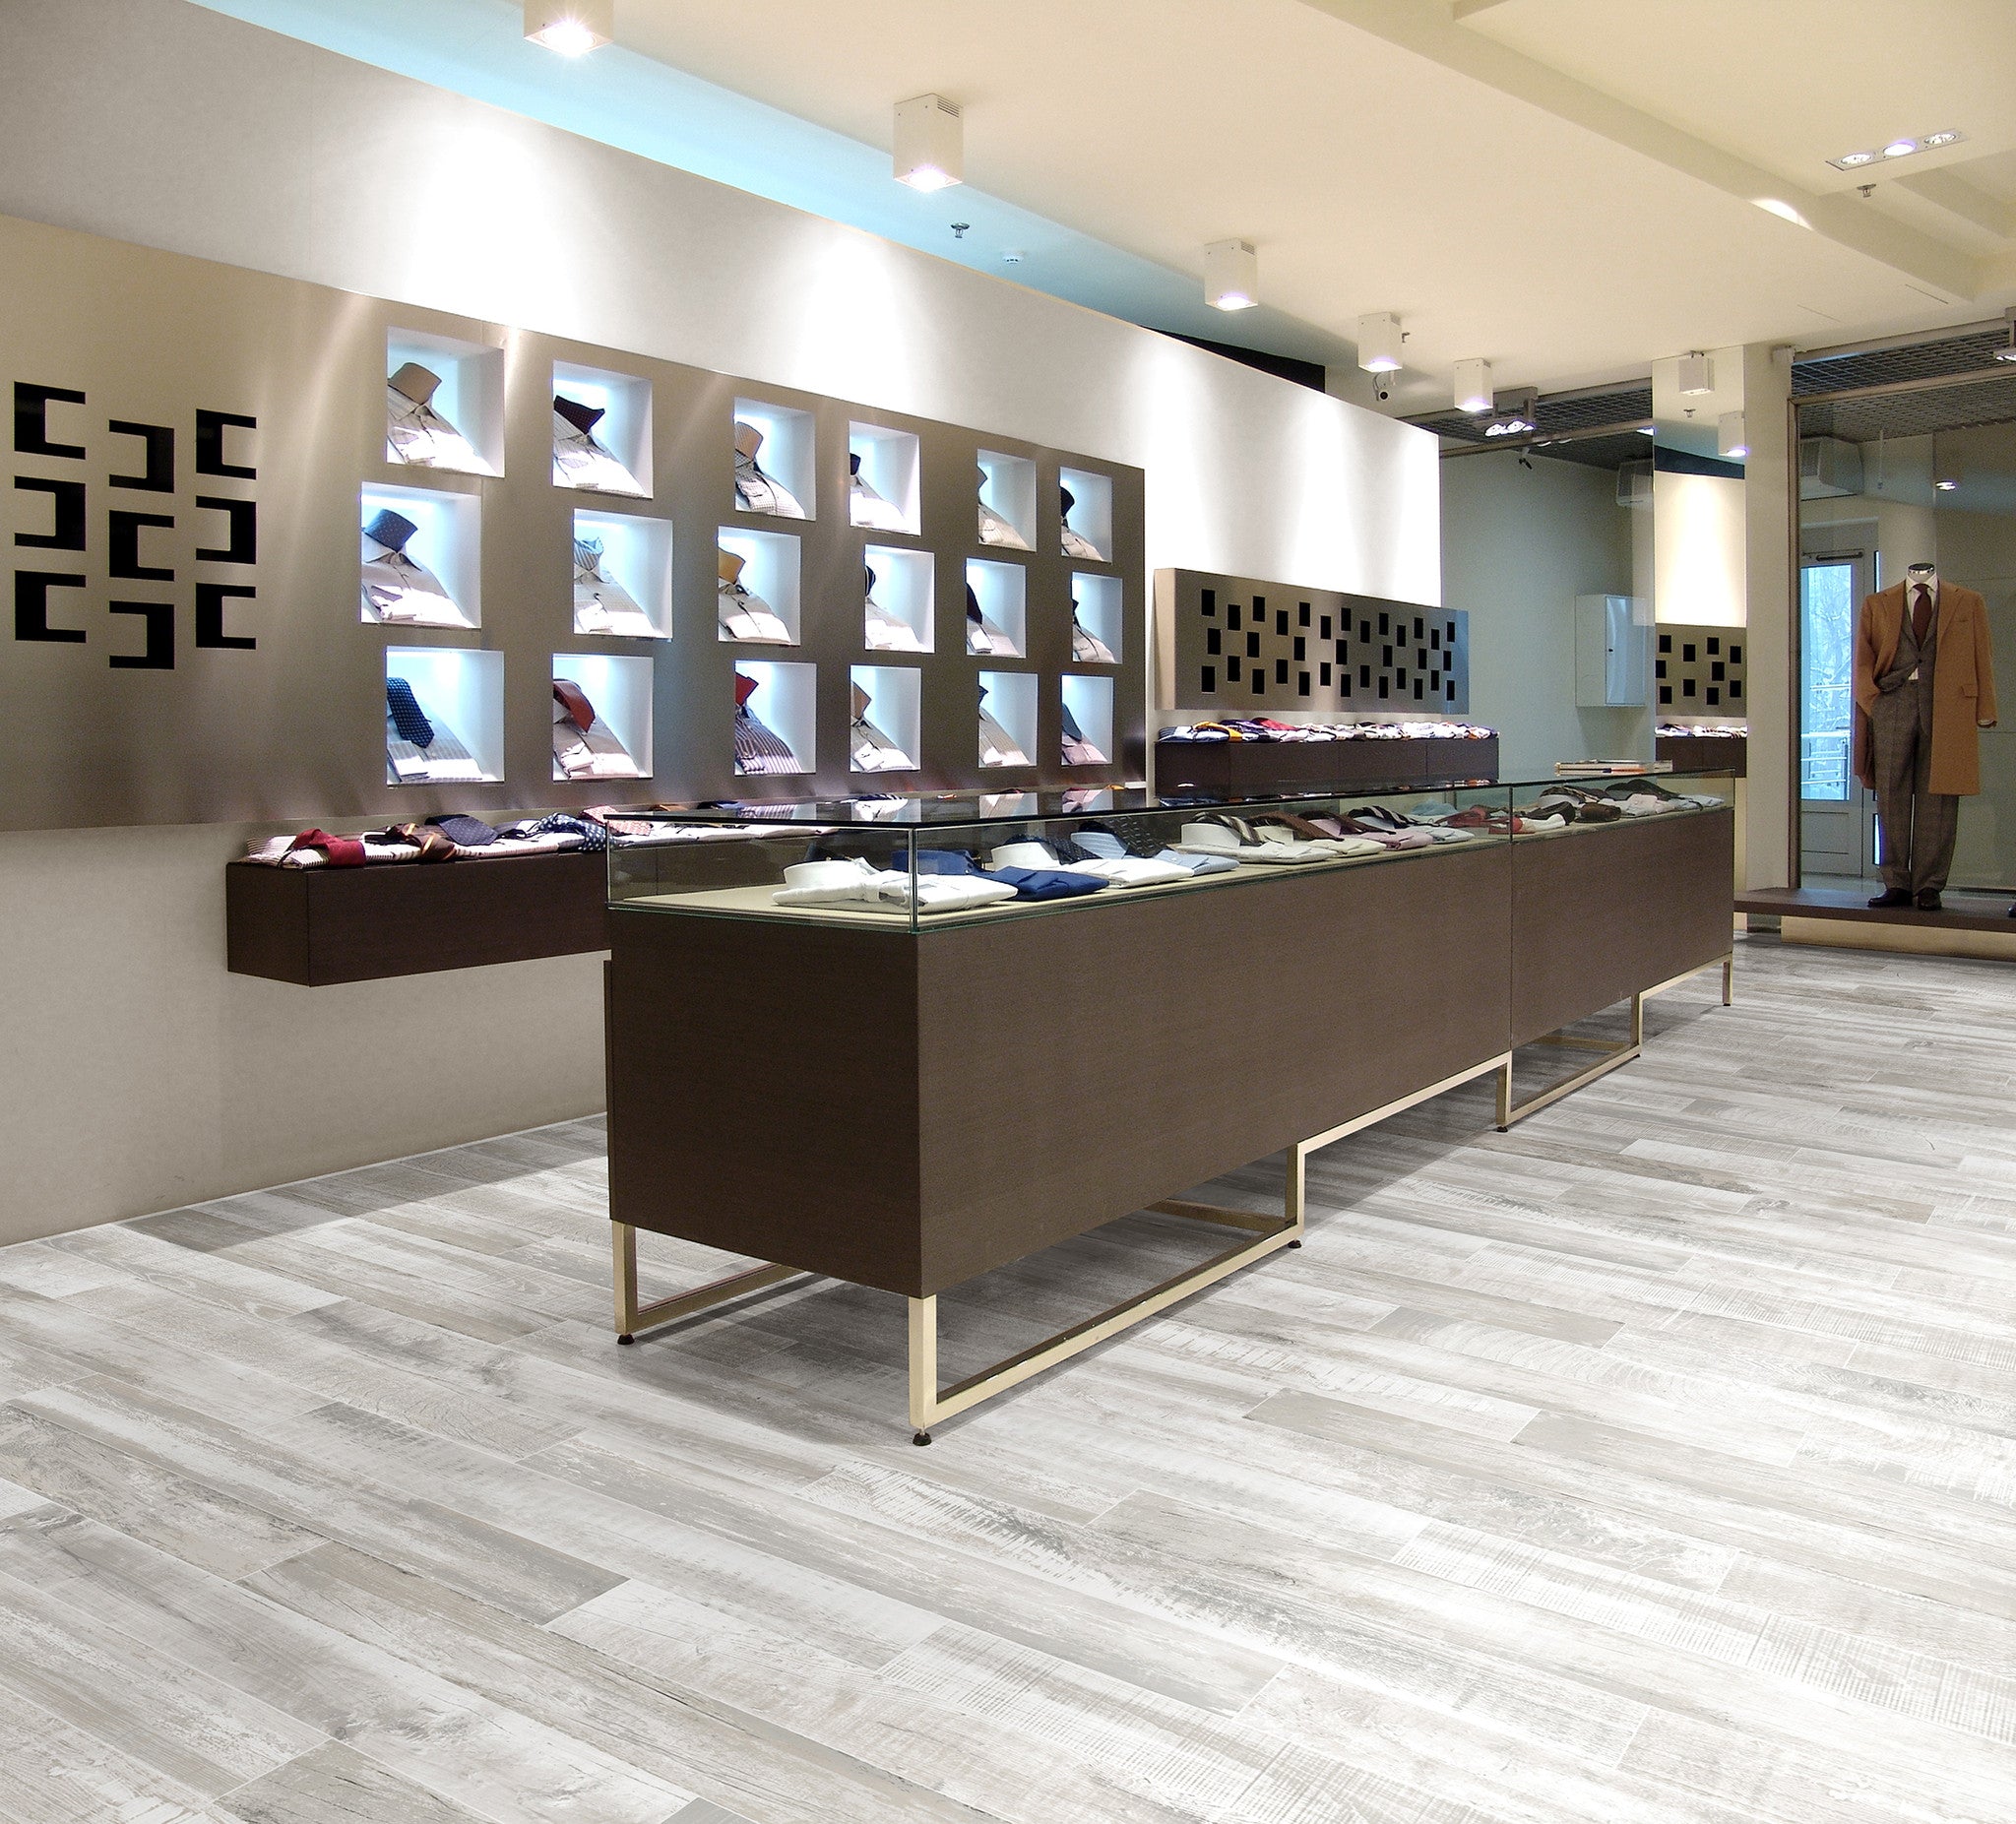 Artic White Wooden Effect Retail Floor Tiles